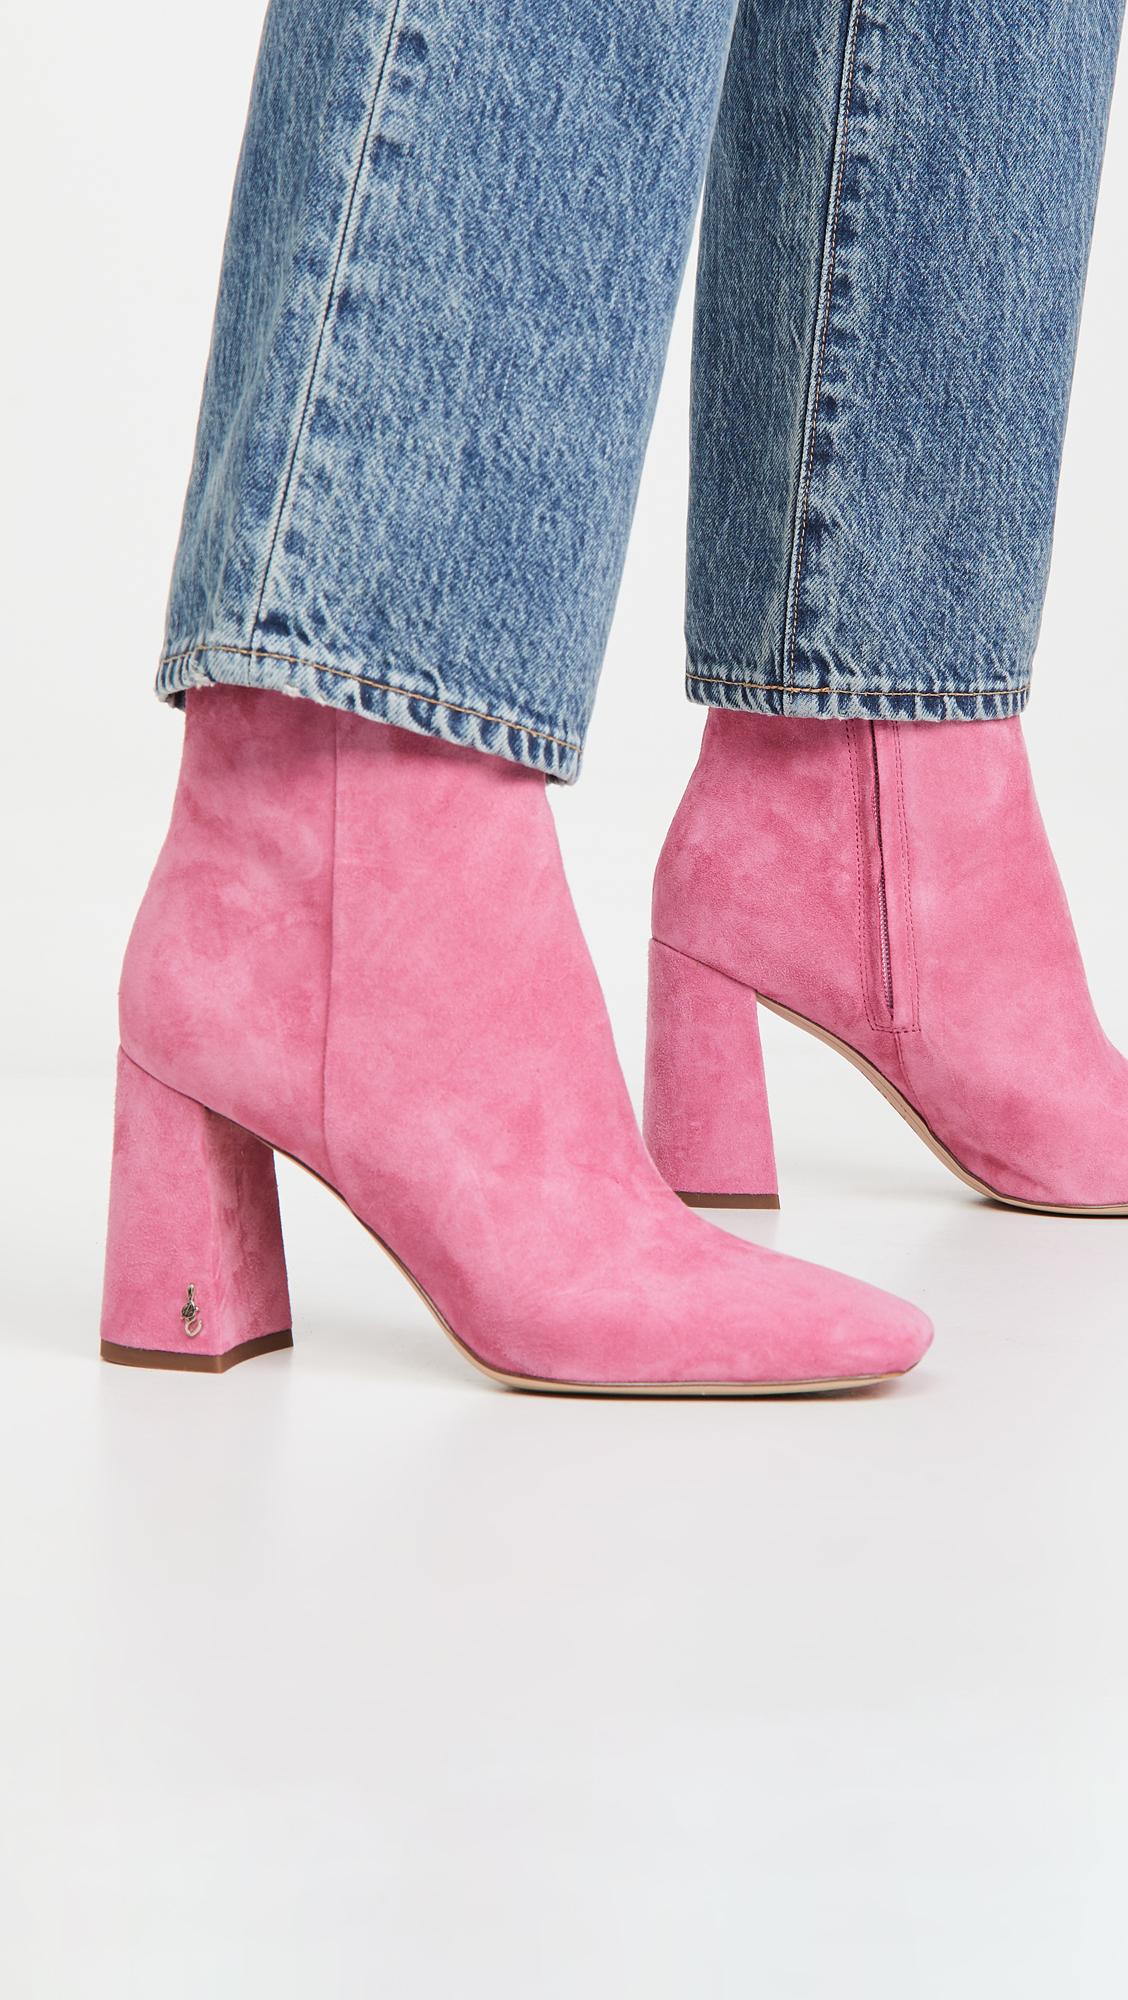 Sam Edelman Leather Codie Booties in Pink - Lyst